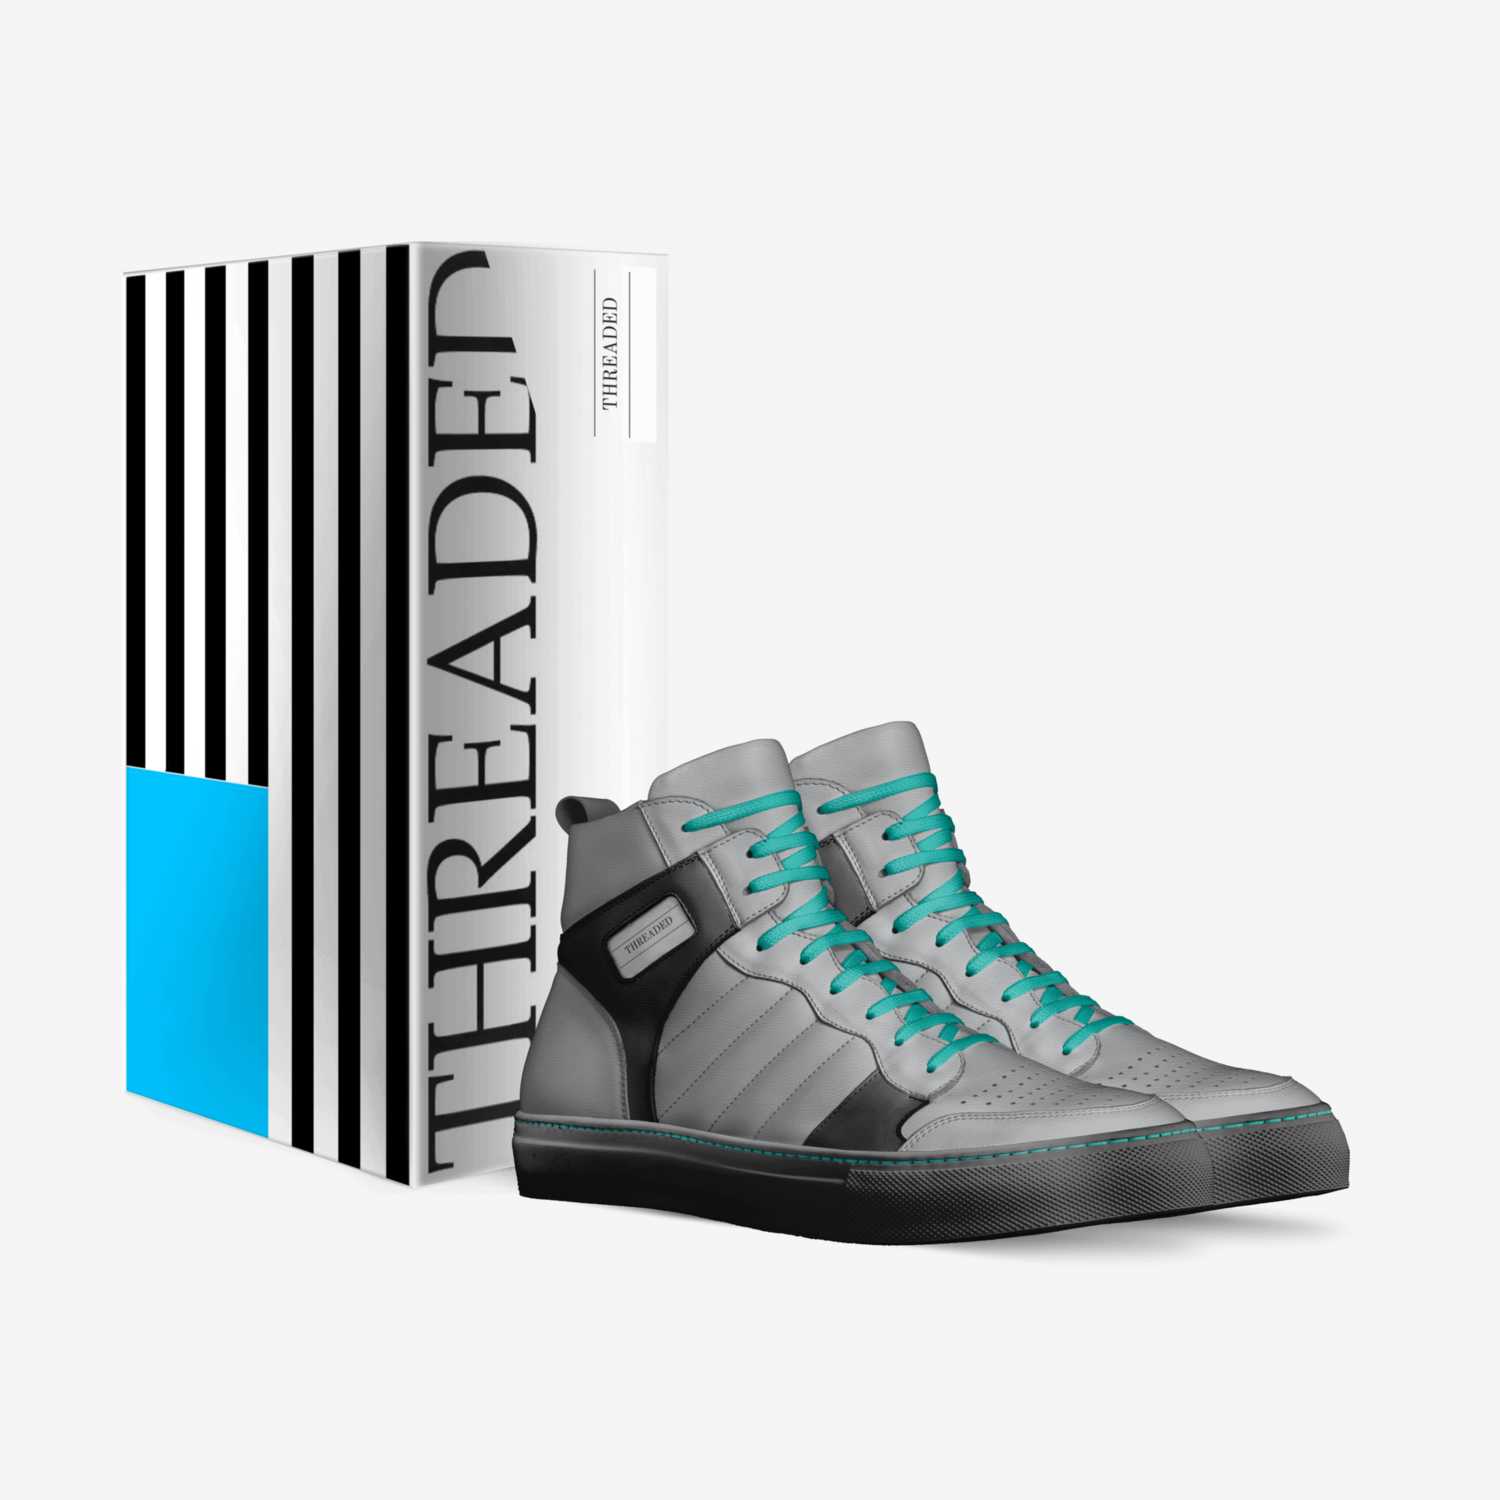 THREADED KICKS custom made in Italy shoes by Milan Skokic | Box view